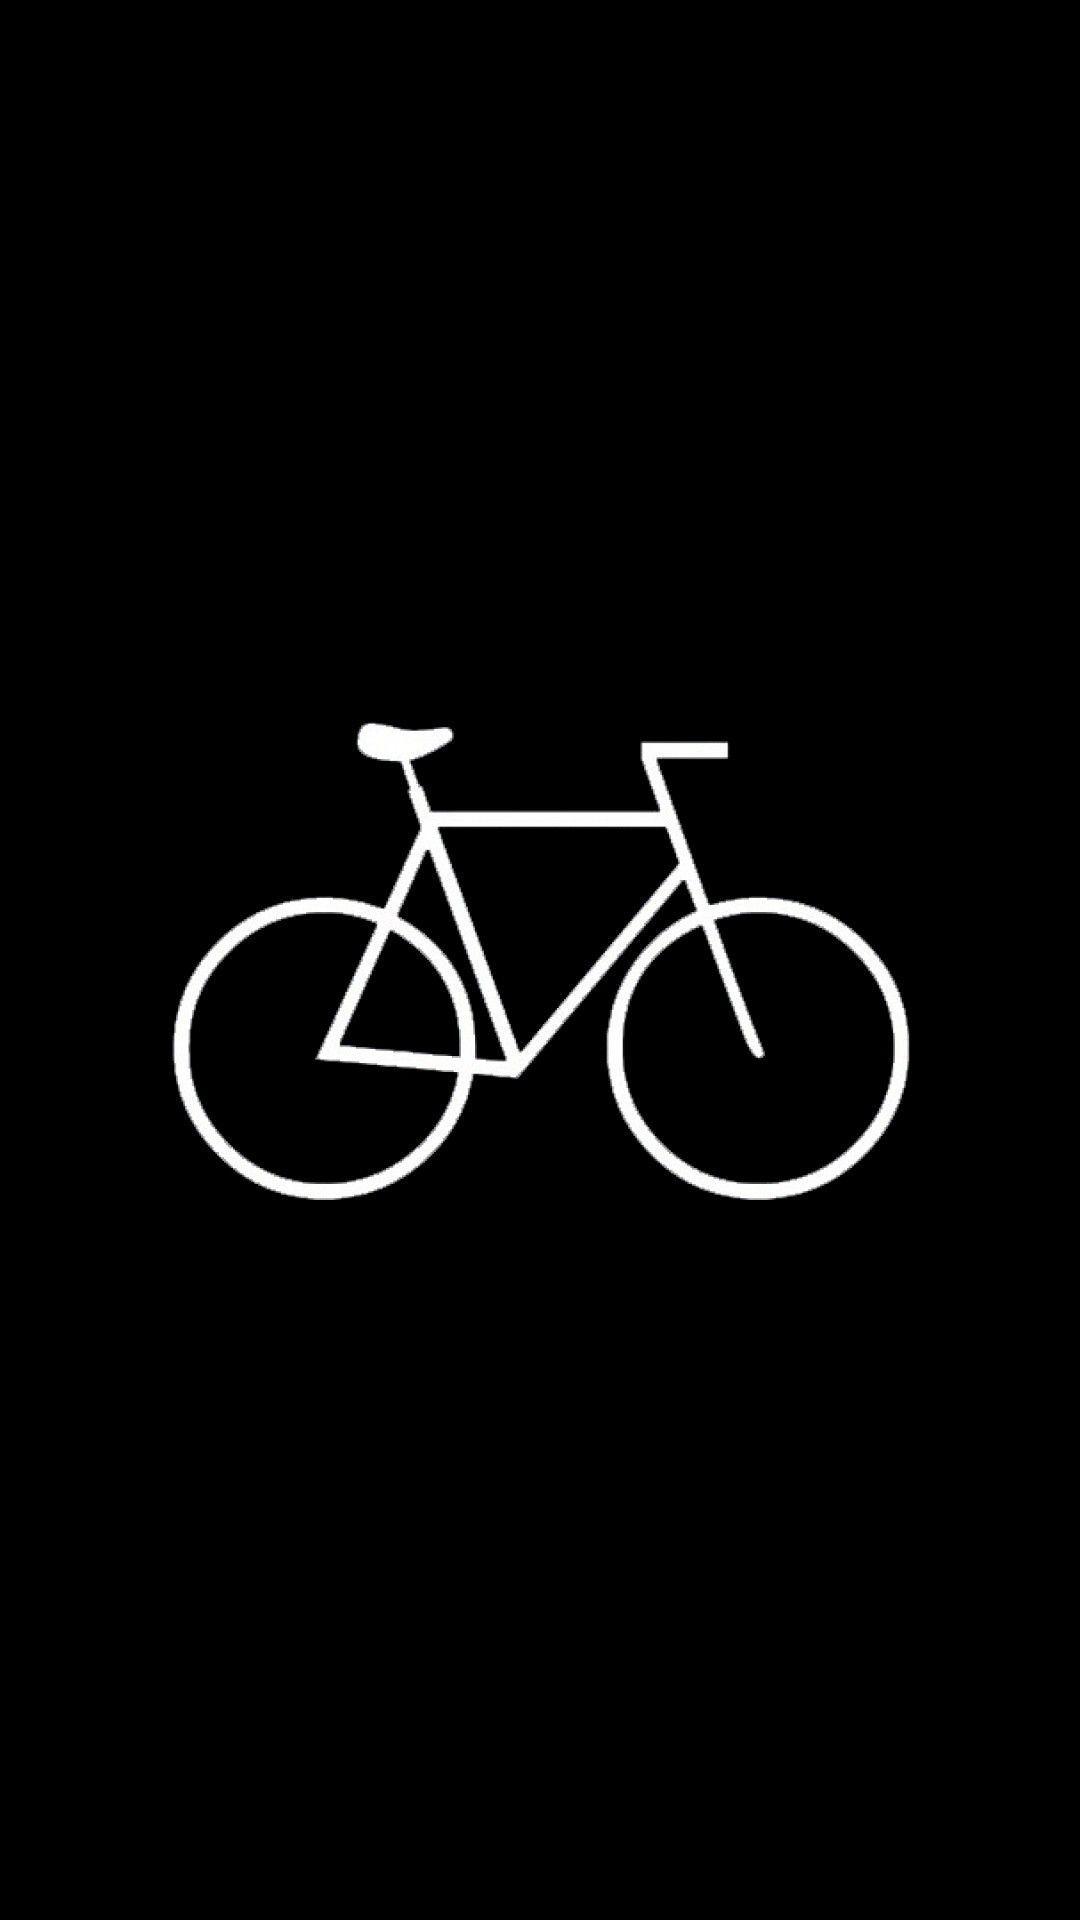 Cars & Bikes iPhone 6 Plus Wallpaper Simple Bicycle